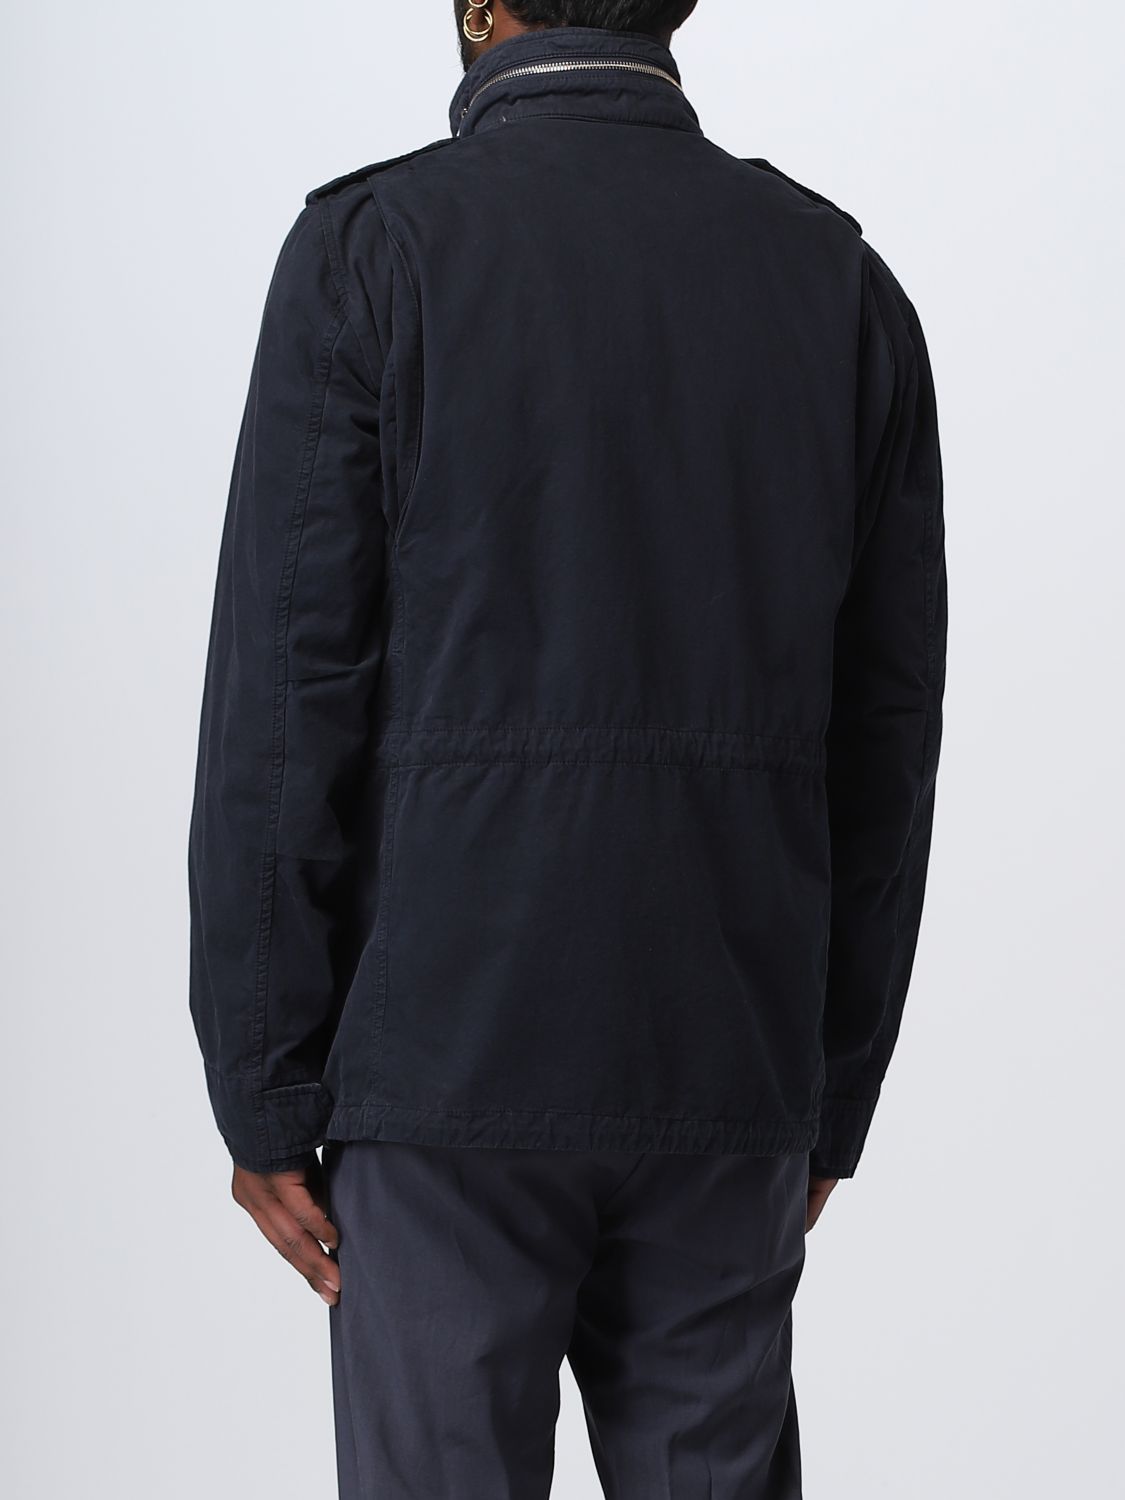 ASPESI: jacket for man - Navy | Aspesi jacket CG20A262 online on GIGLIO.COM